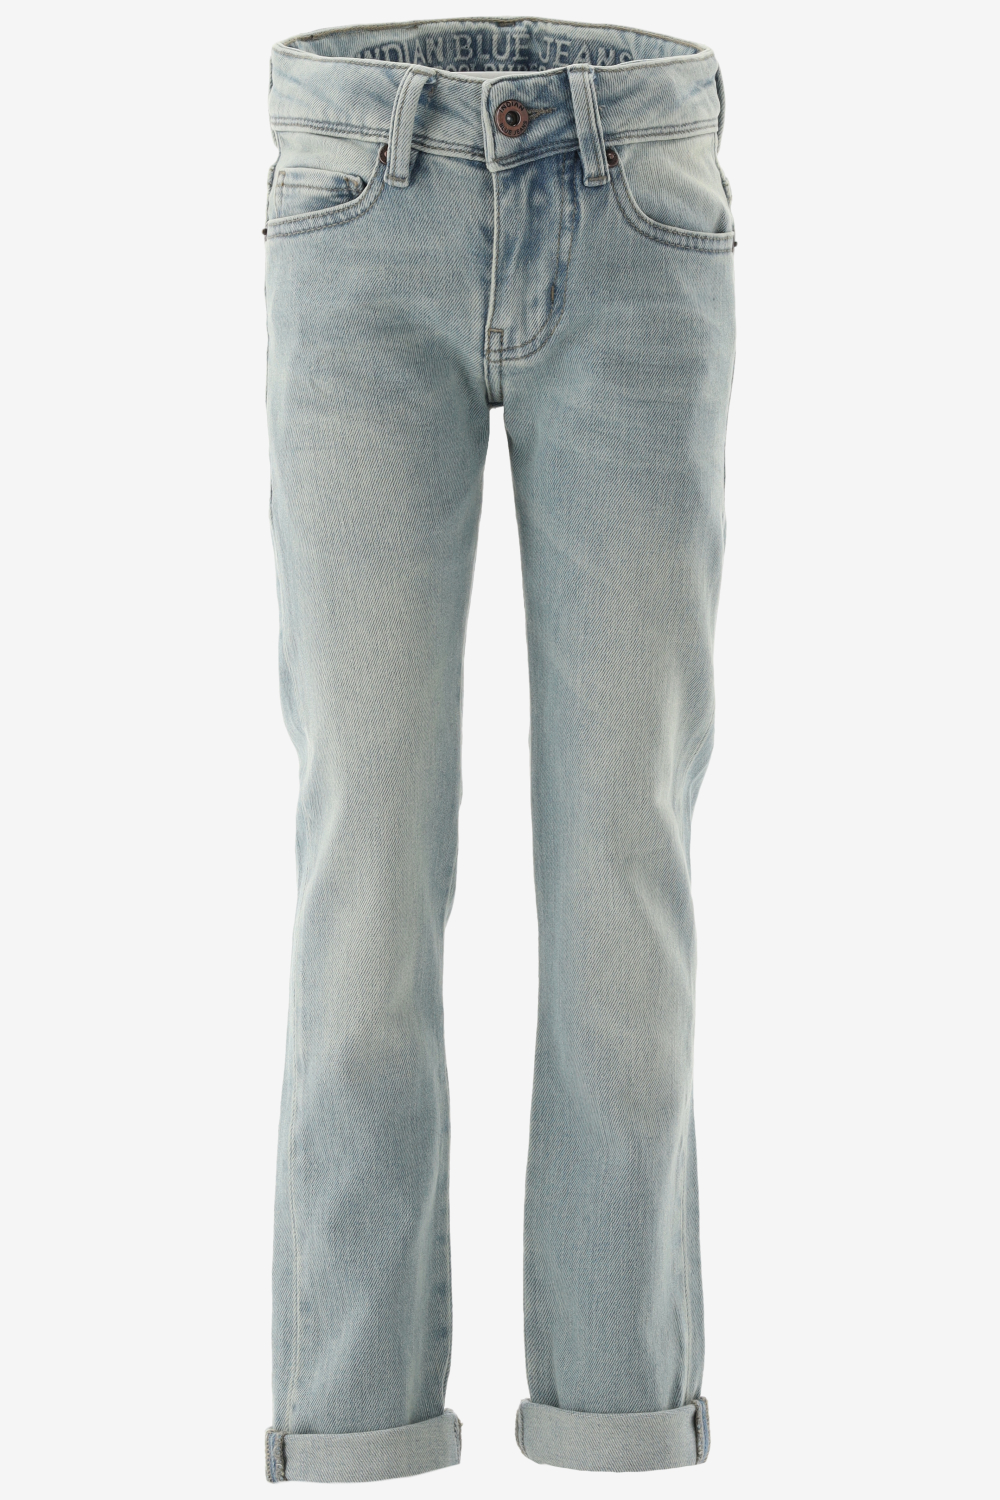 Indian Blue Jeans - Jeans - Light Denim - Maat 116